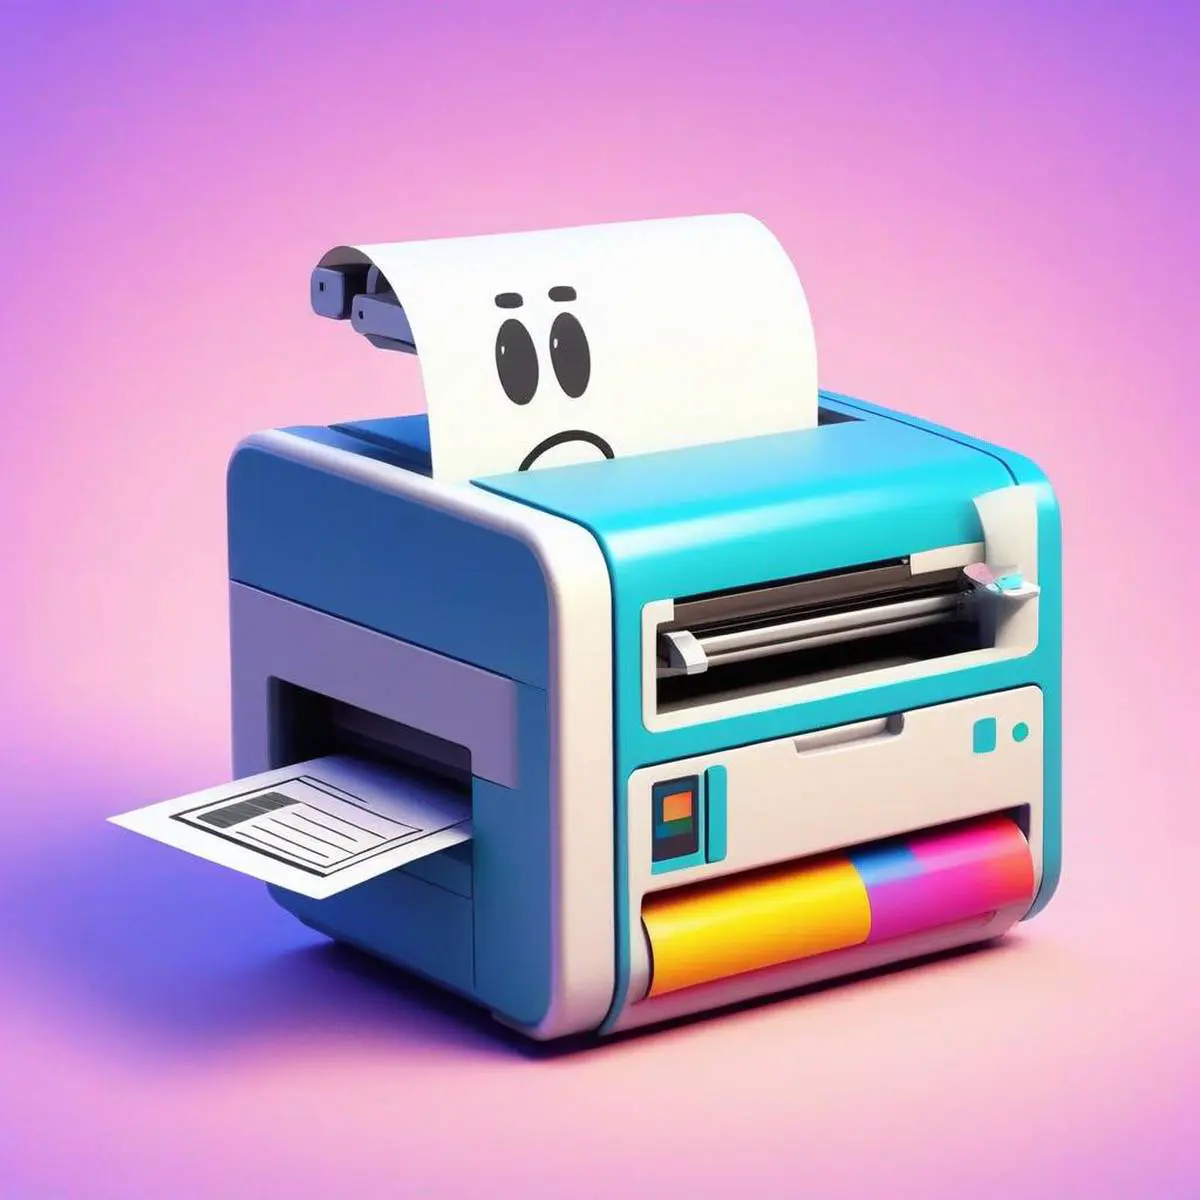 Printer puns